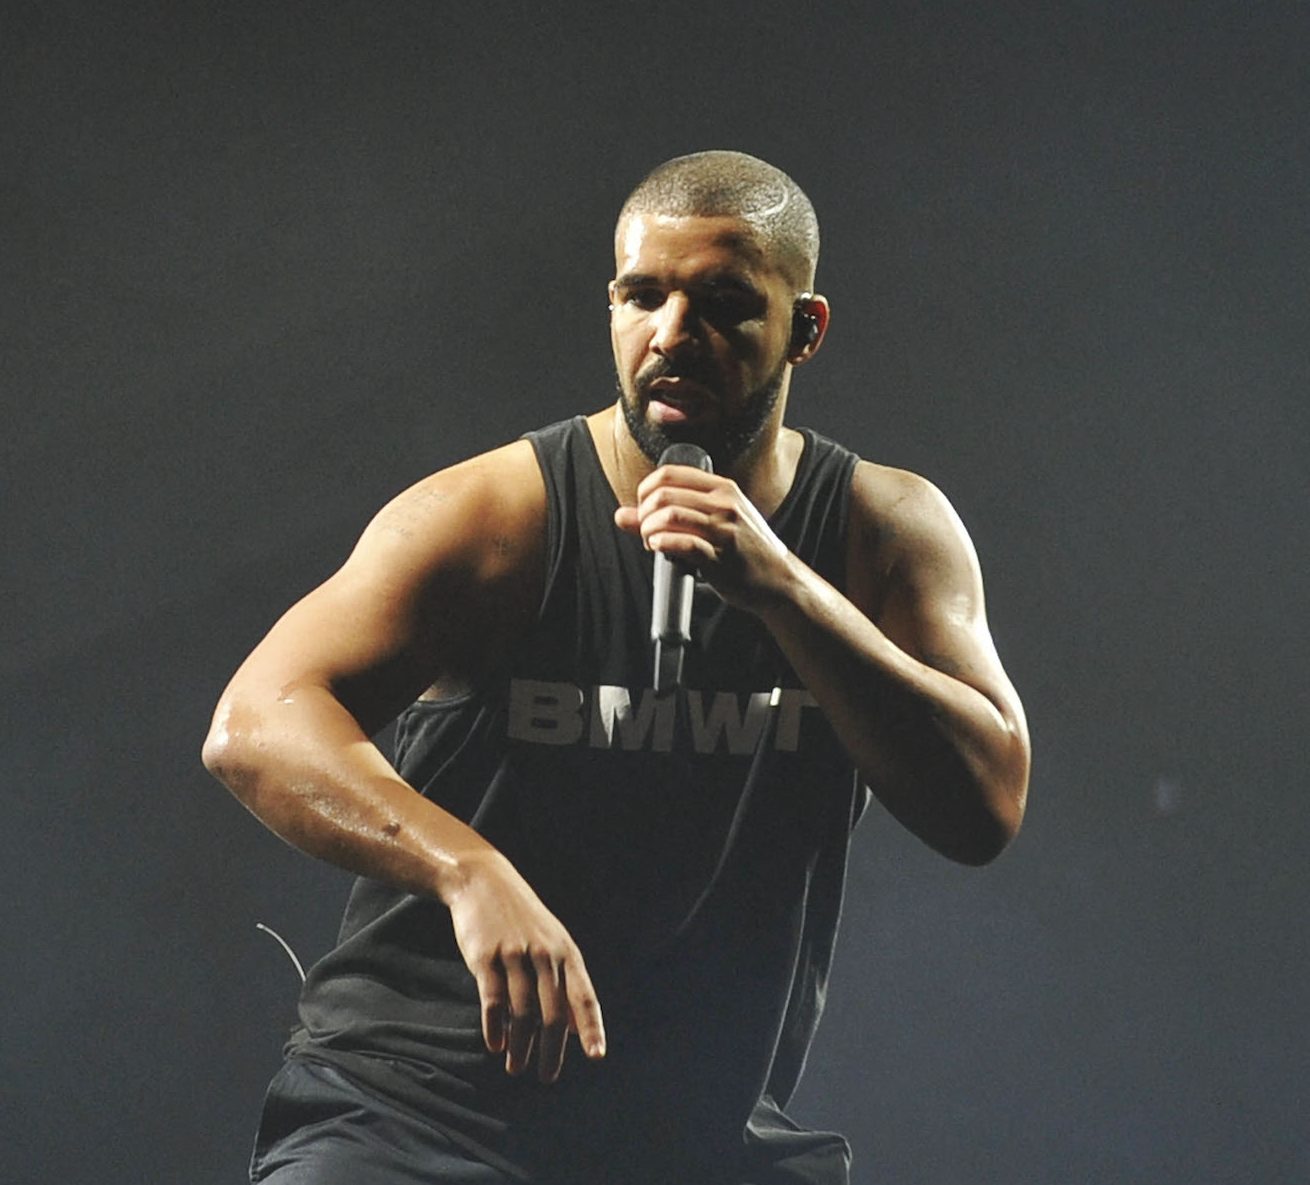 Drake's 36G Cinderella Pulls Playboy Partnership After Viral Video